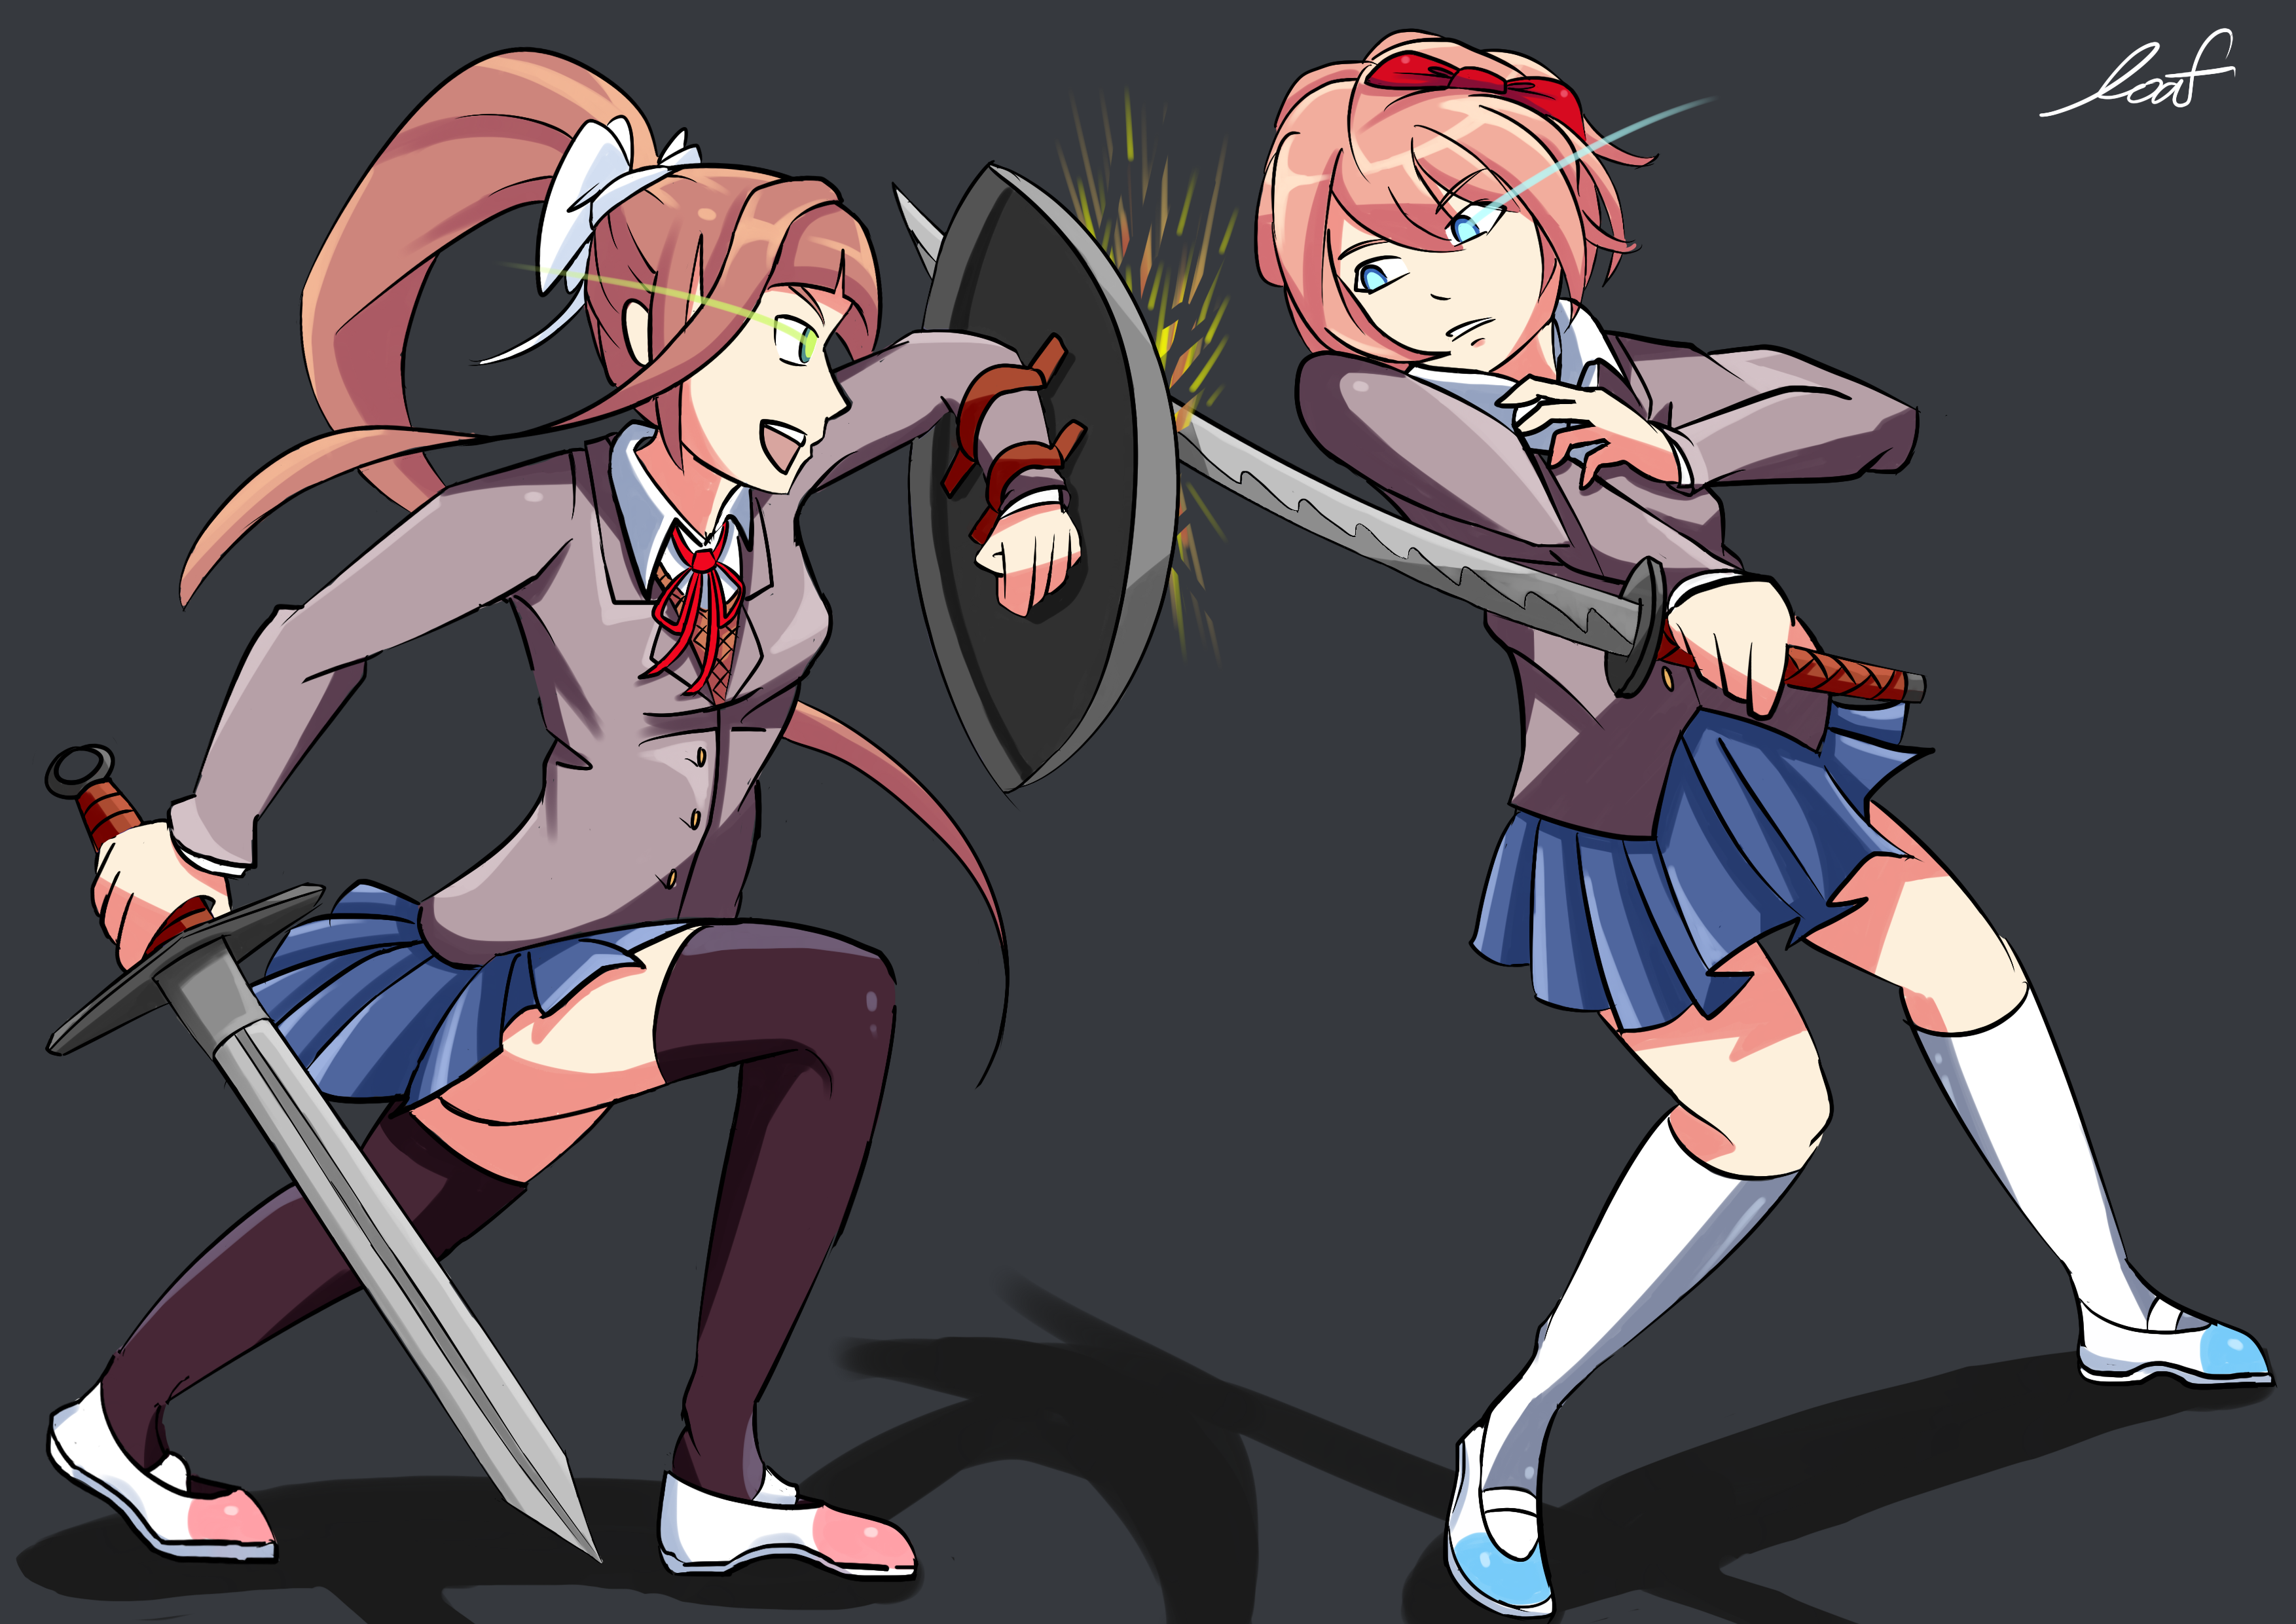 Monika Fights Sayori By Laughloaf On Deviantart